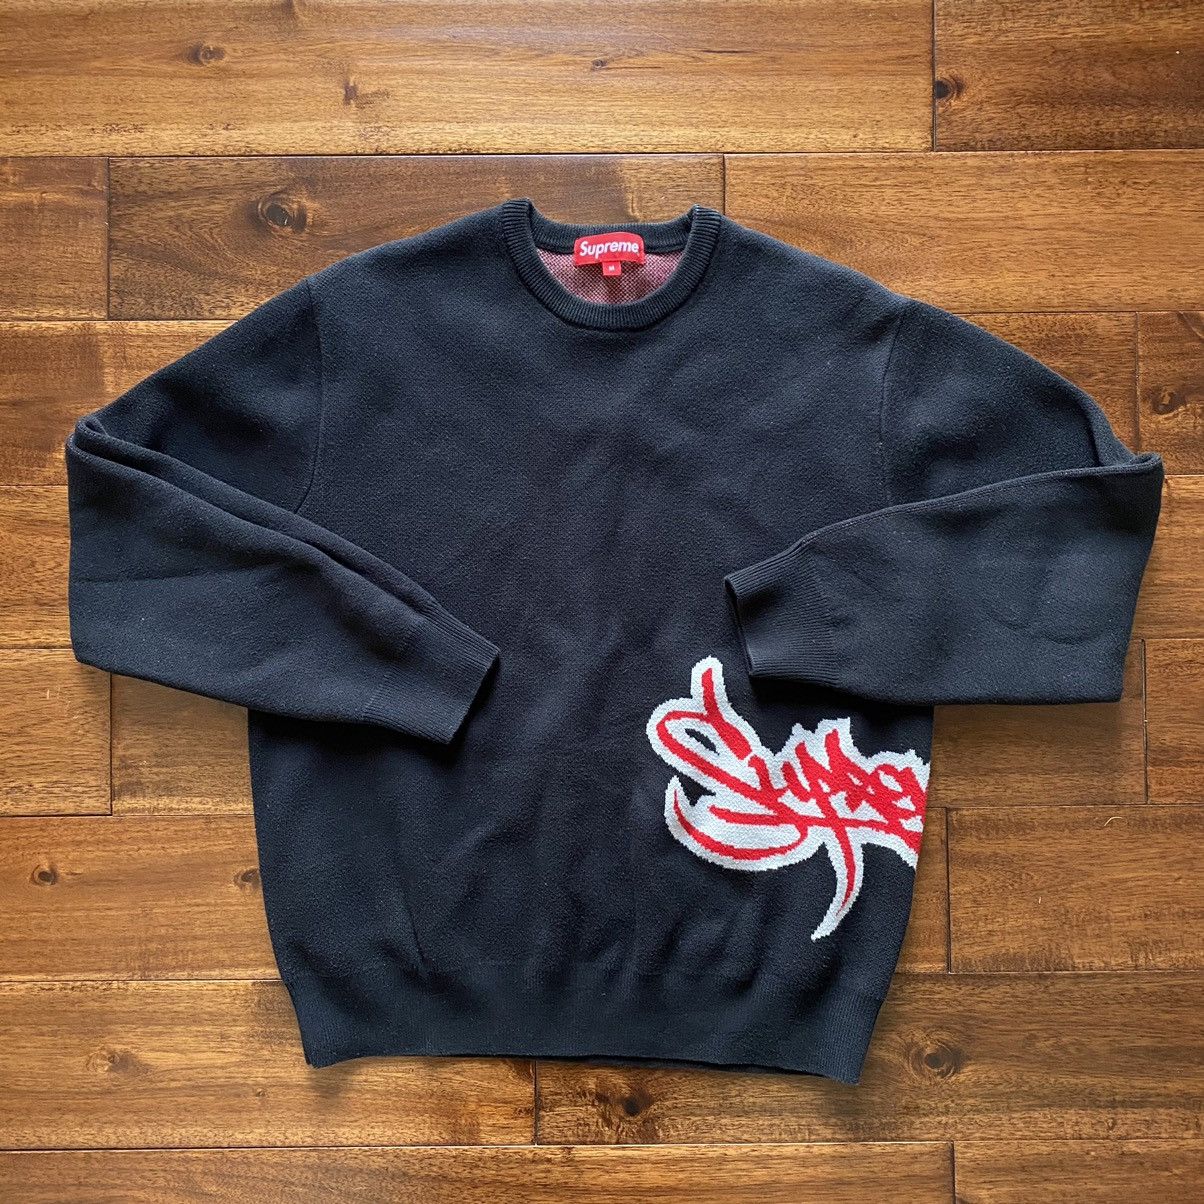 Supreme Tag Logo Sweater | Grailed